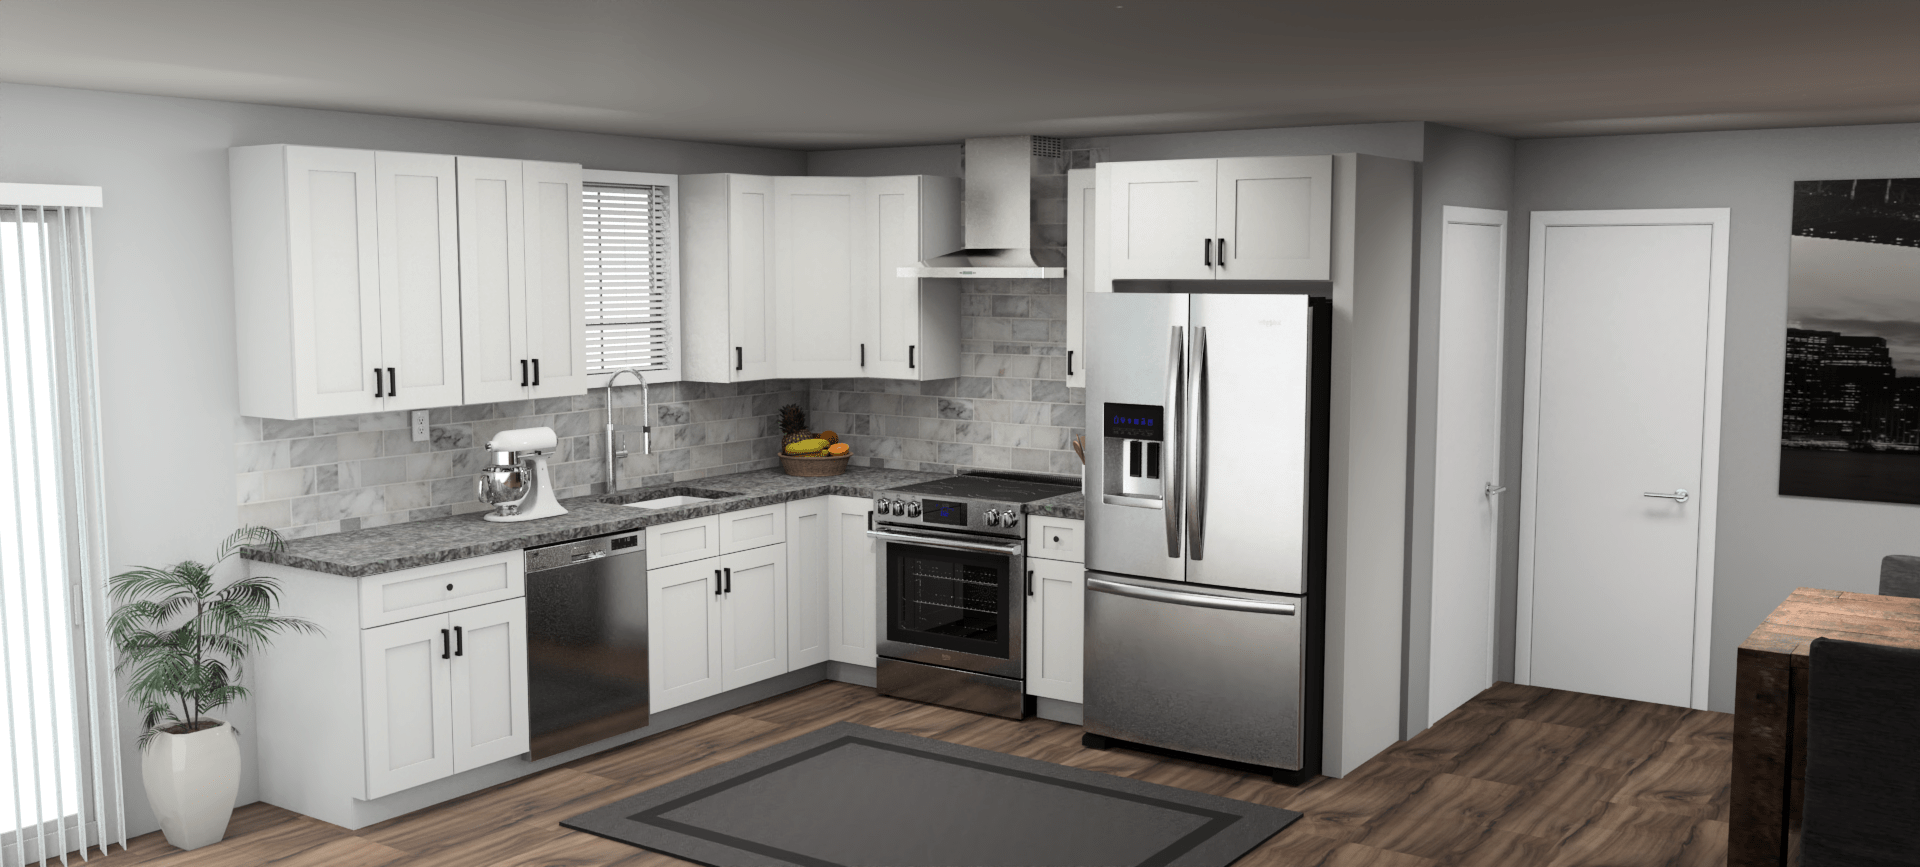 Fabuwood Allure Galaxy Frost 10 x 10 L Shaped Kitchen Main Layout Photo